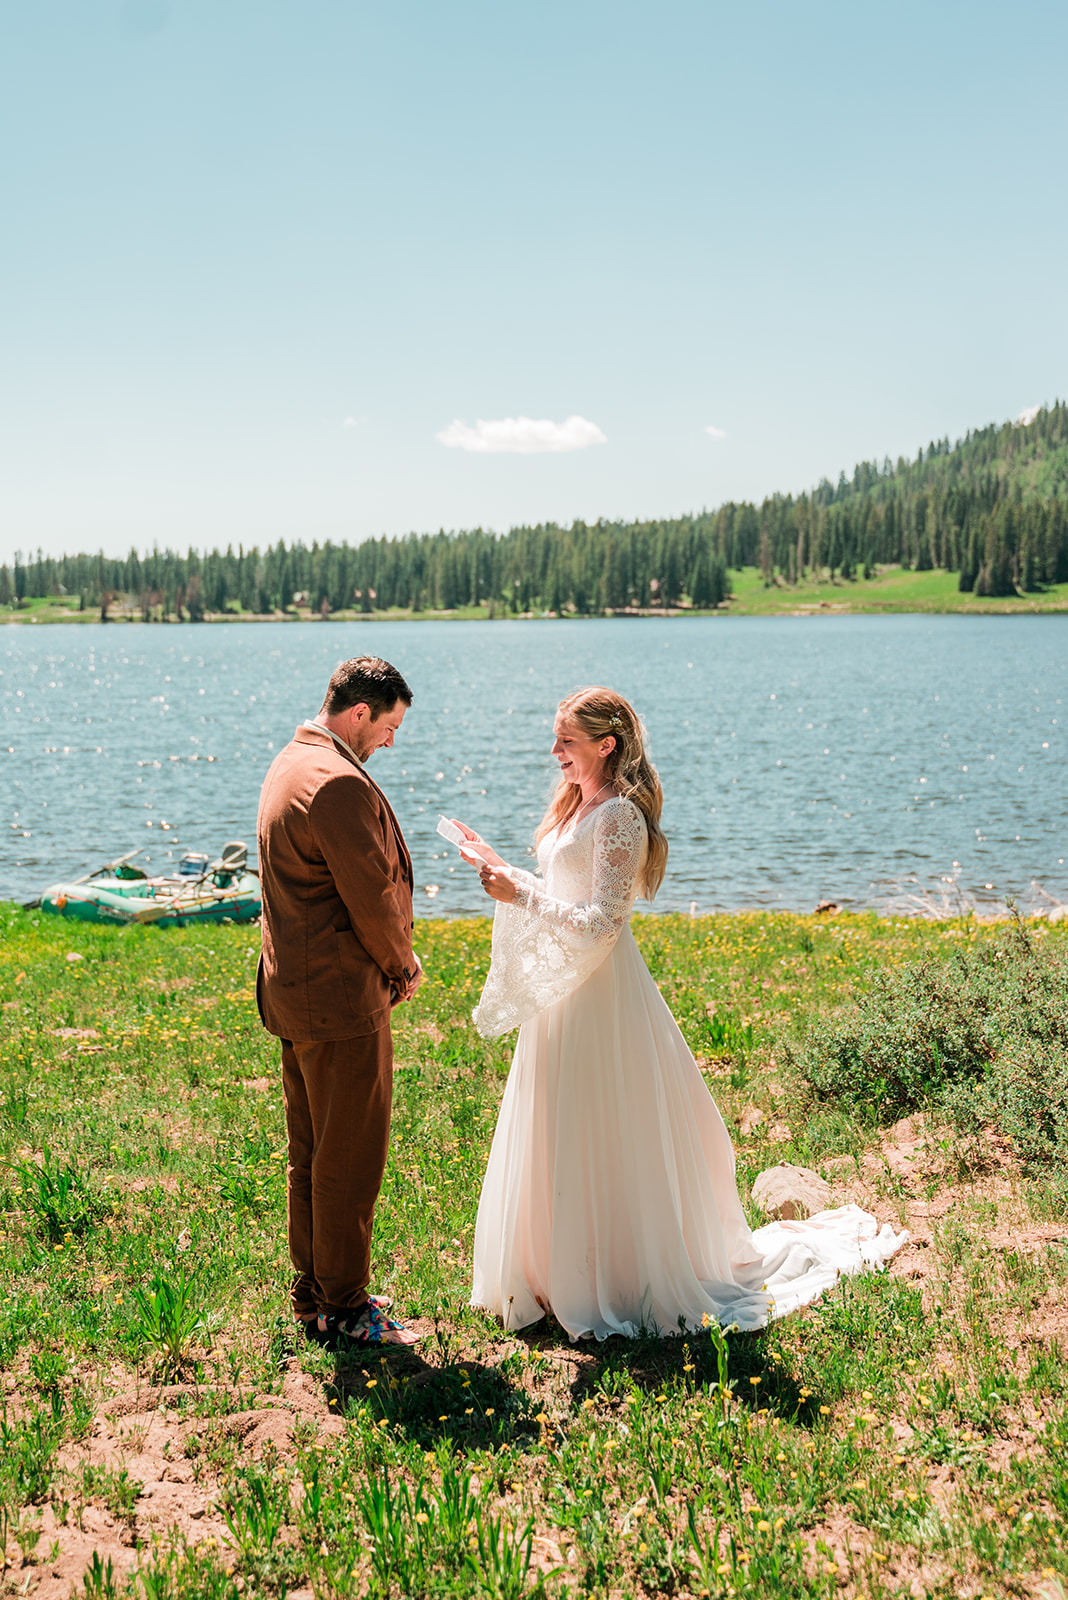 Makenna & Jason | Kiser Creek Cabins Wedding